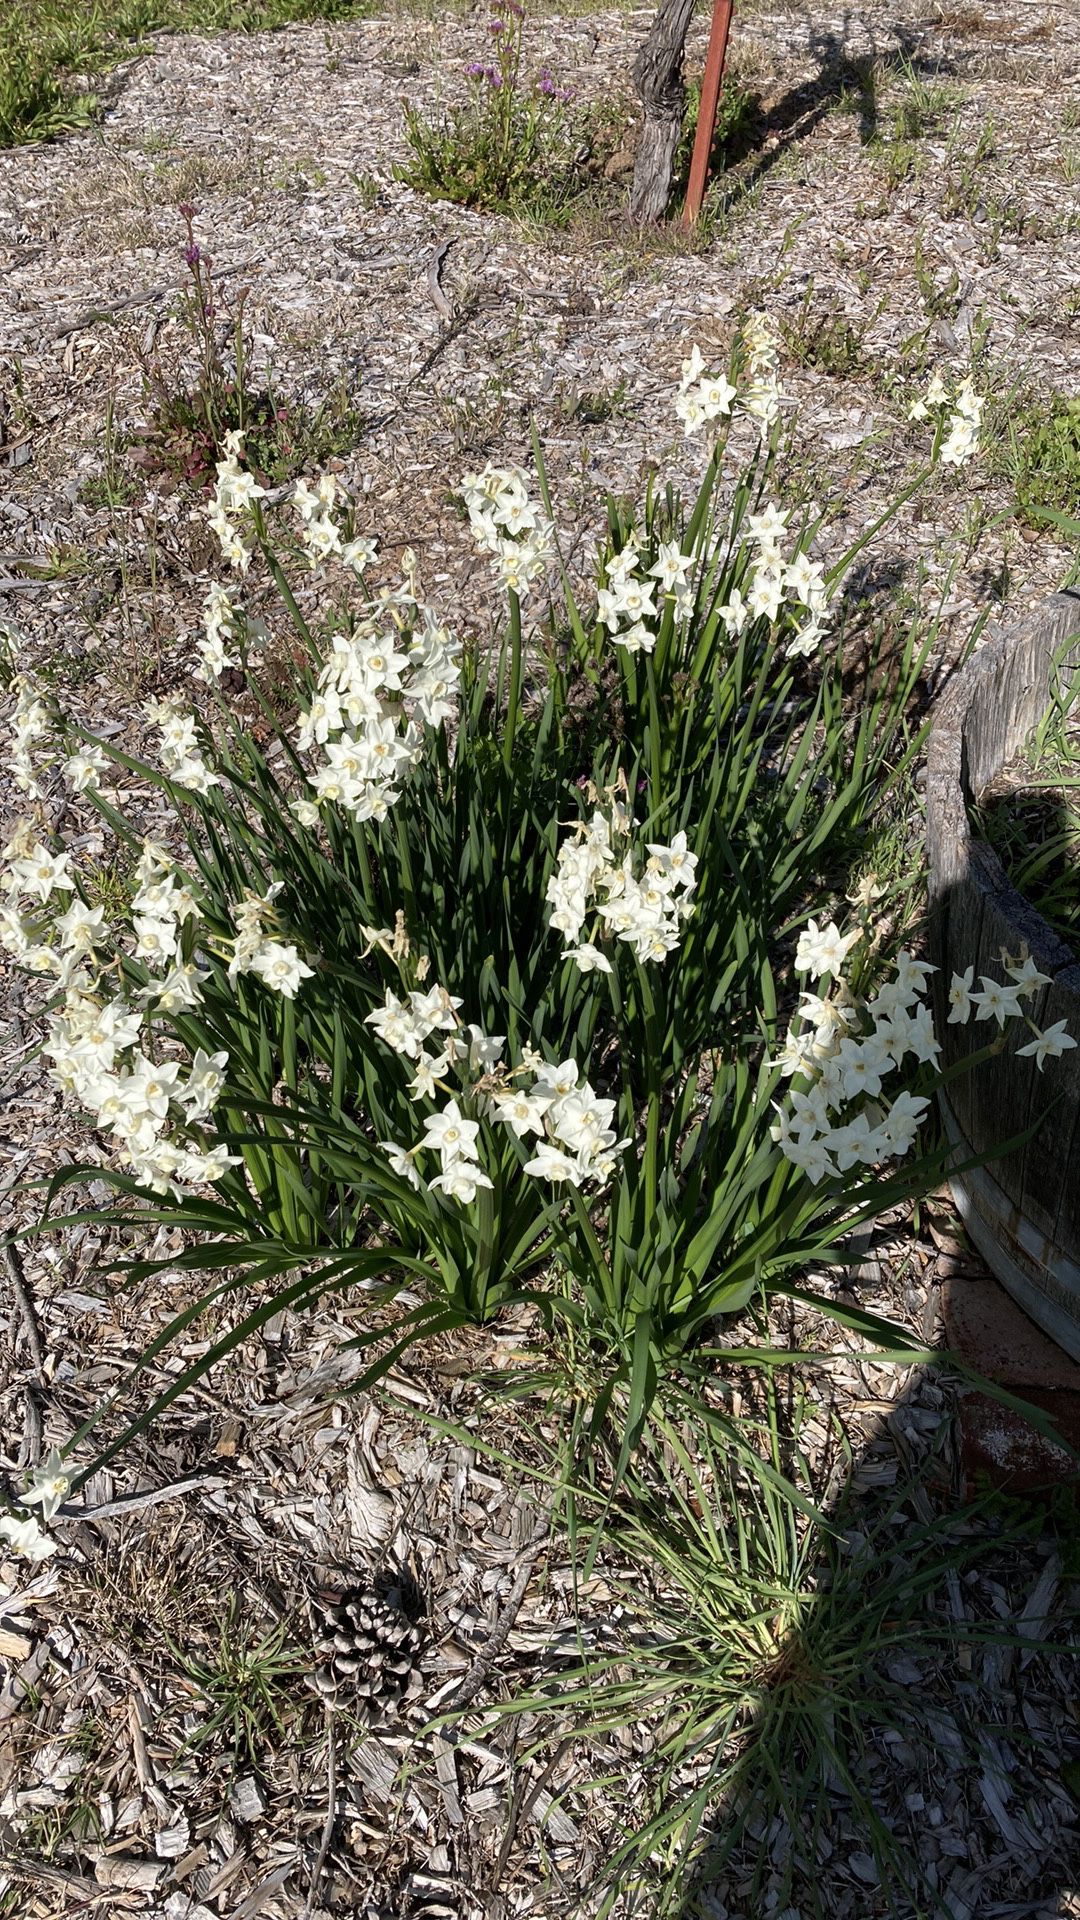 Narcissus Bulbs (paper whites)